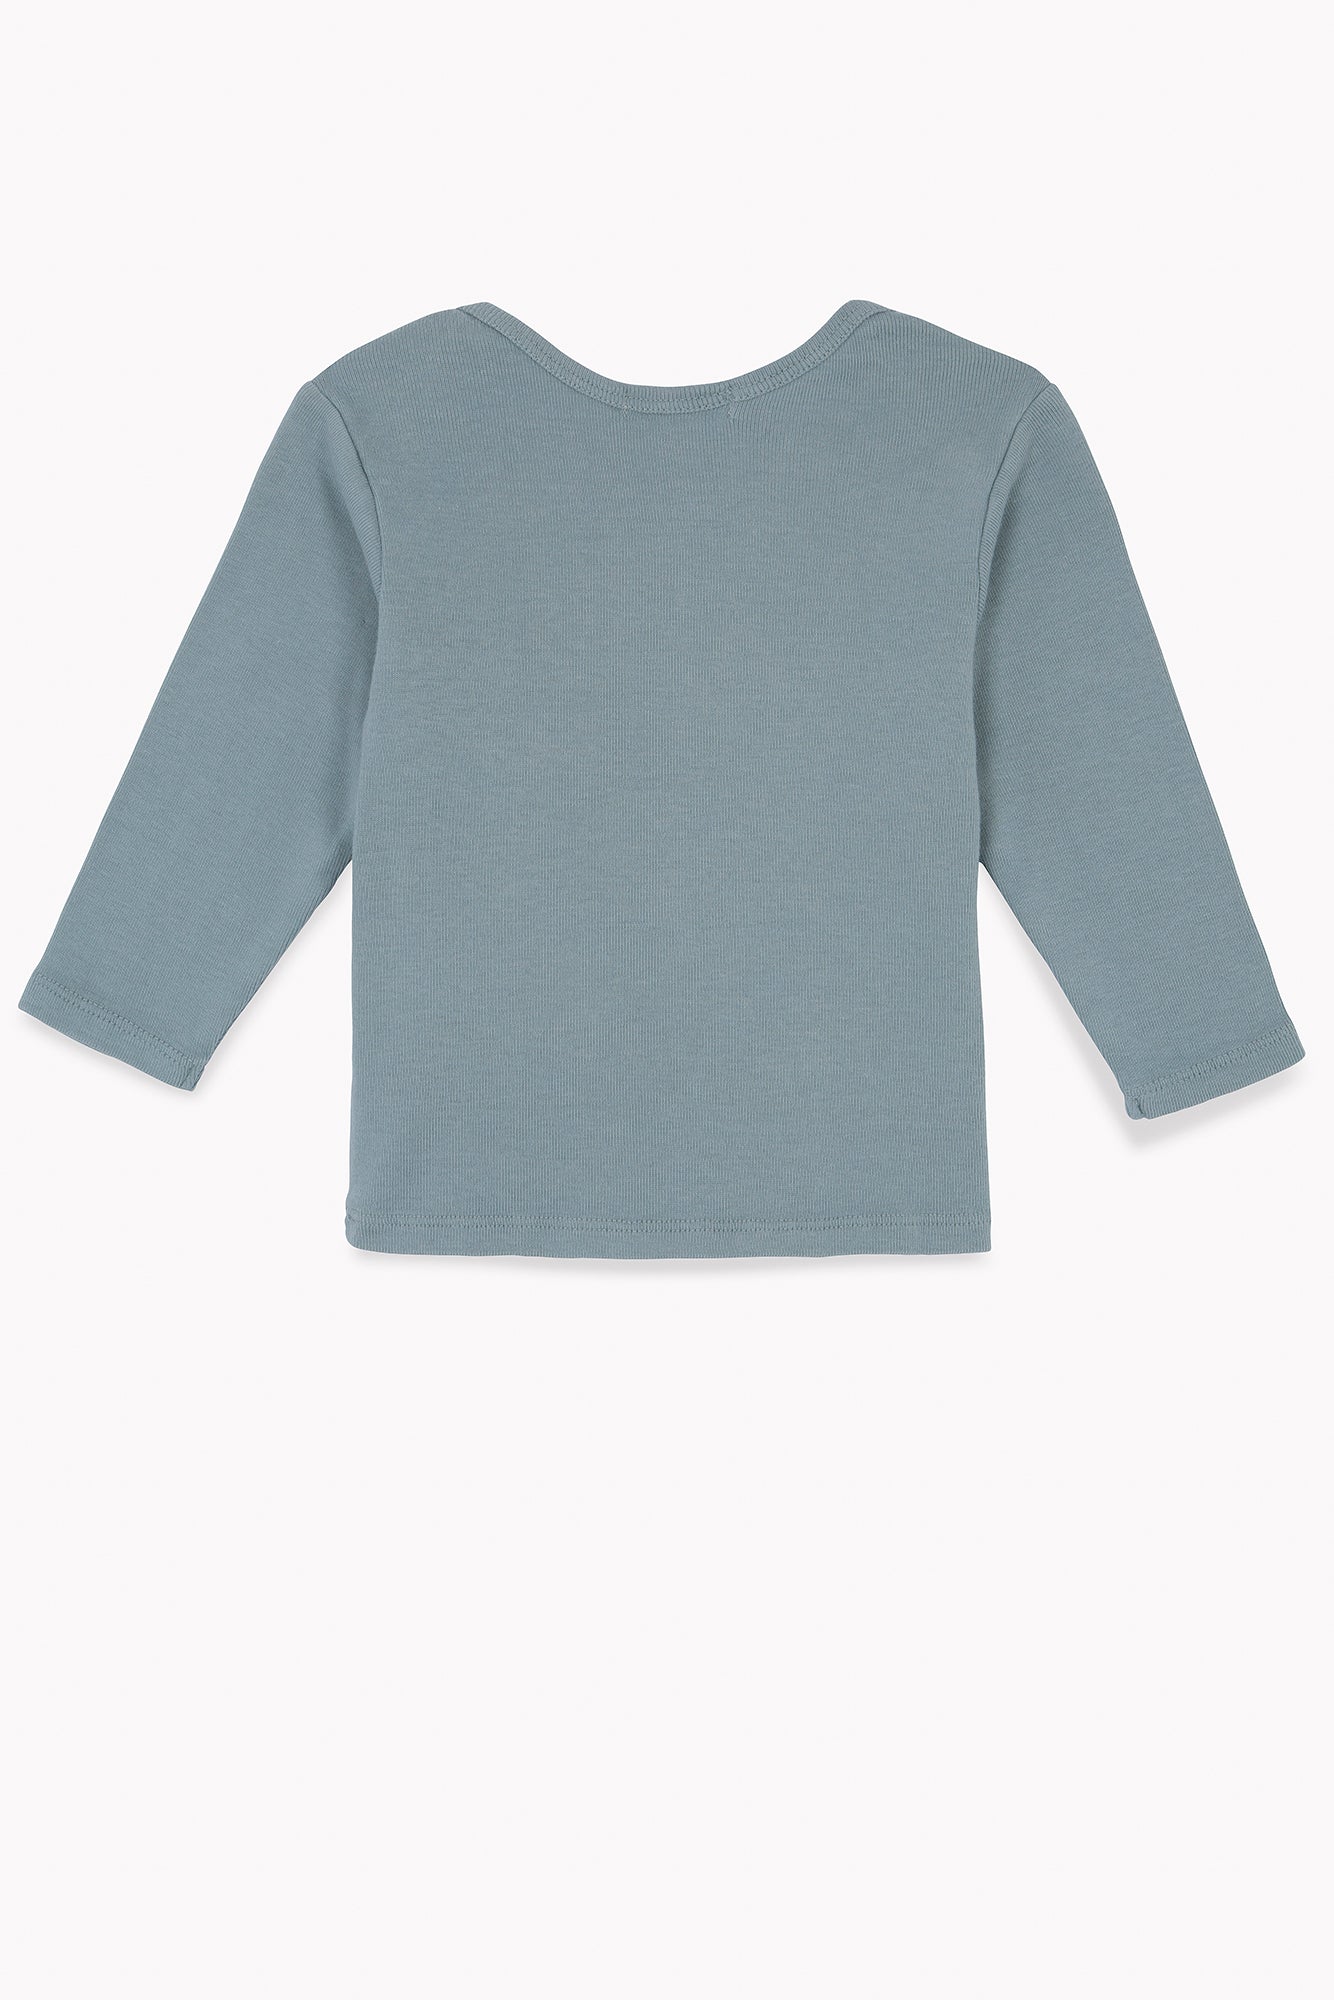 Tee-shirt - Tina bleu Bébé en 100% coton biologique